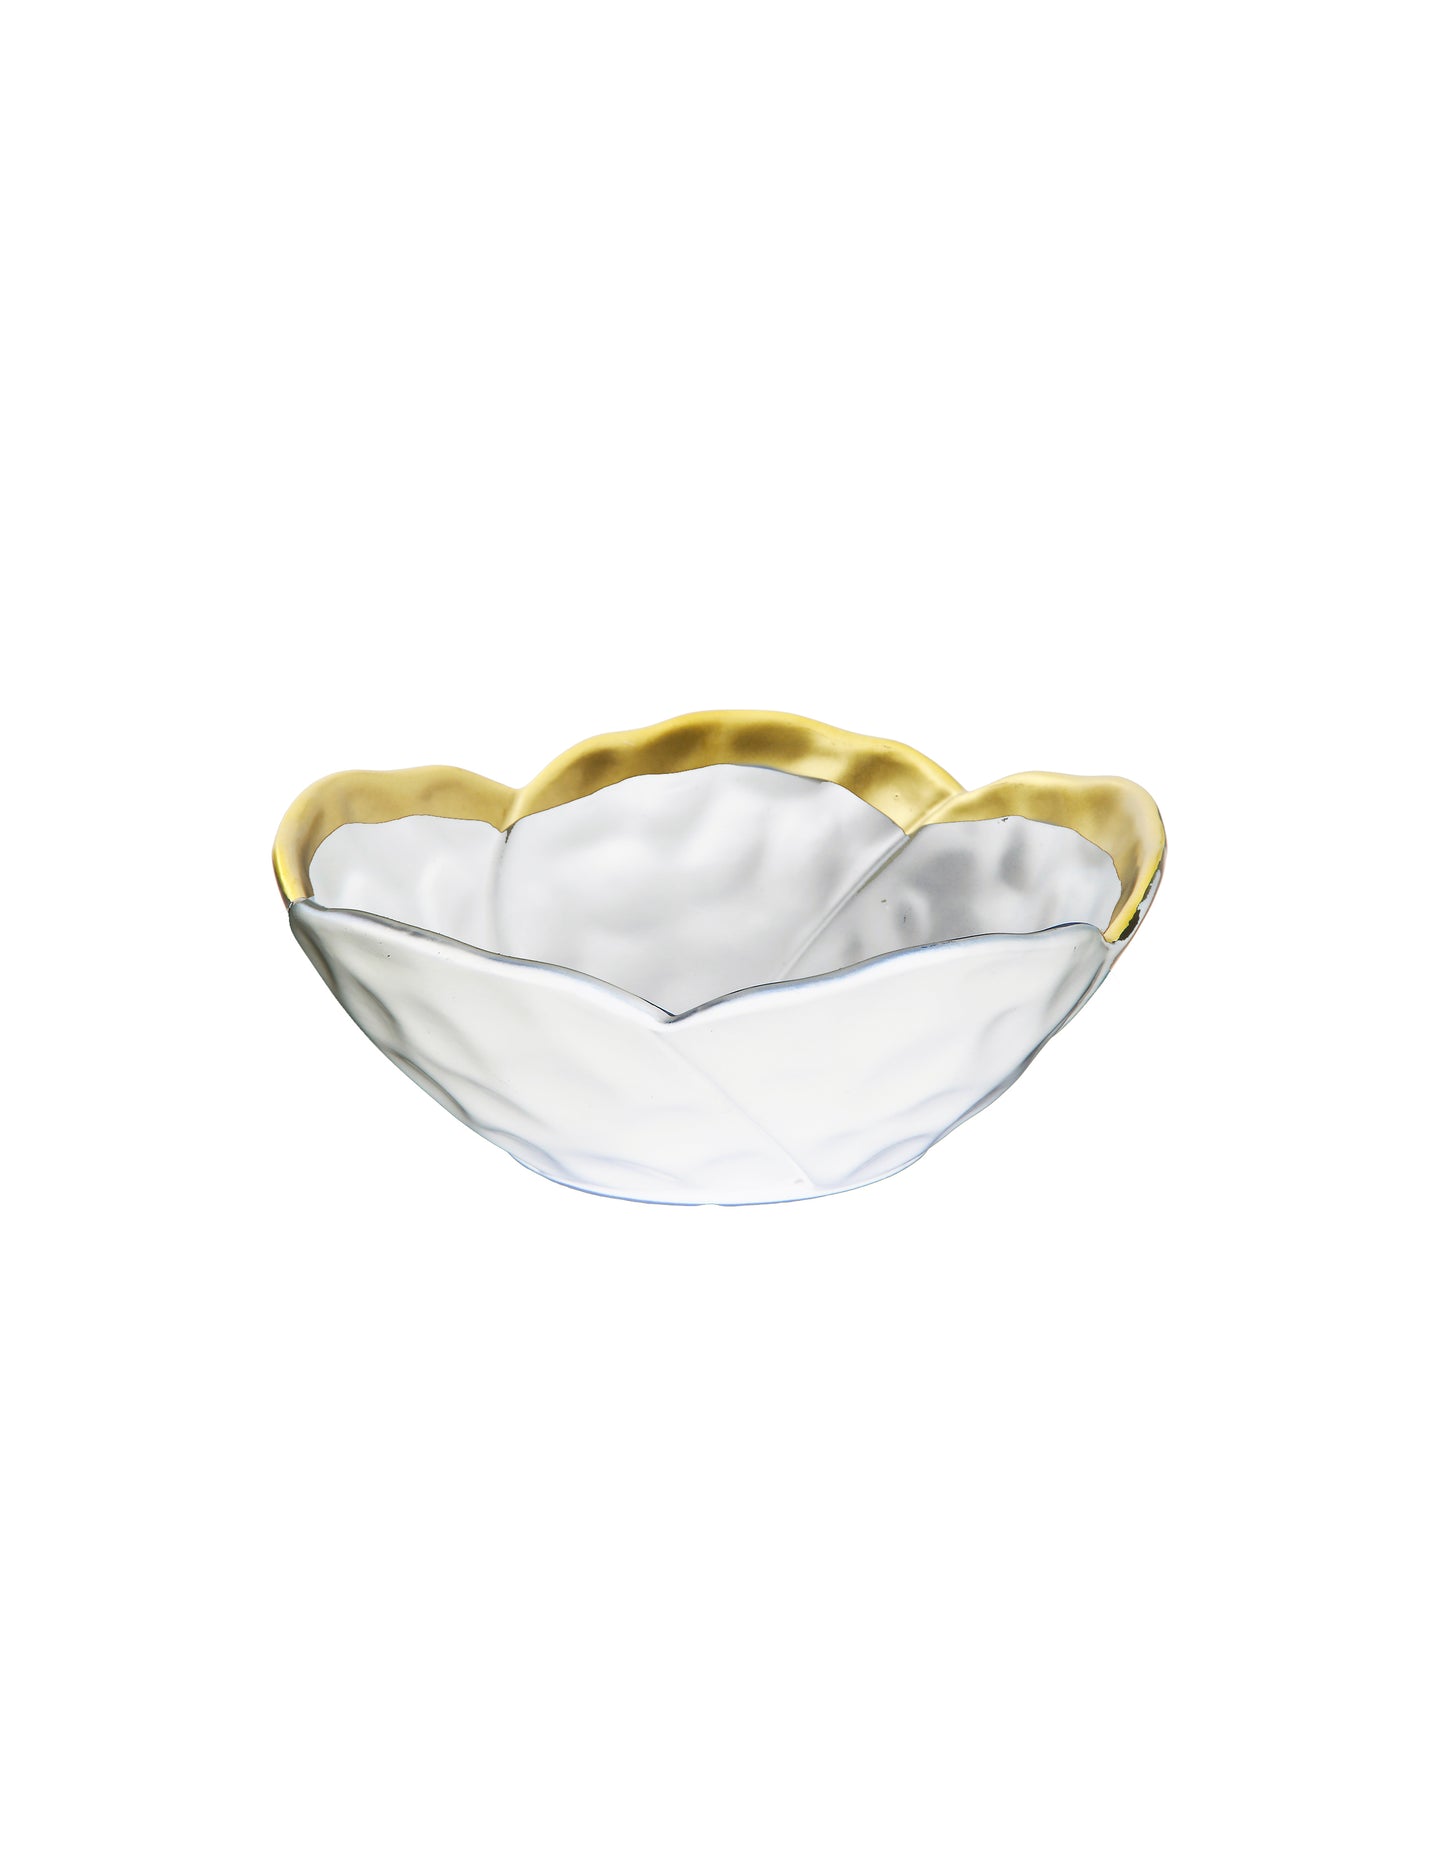 White Porcelain Flower Shaped Bowl with Gold Rim